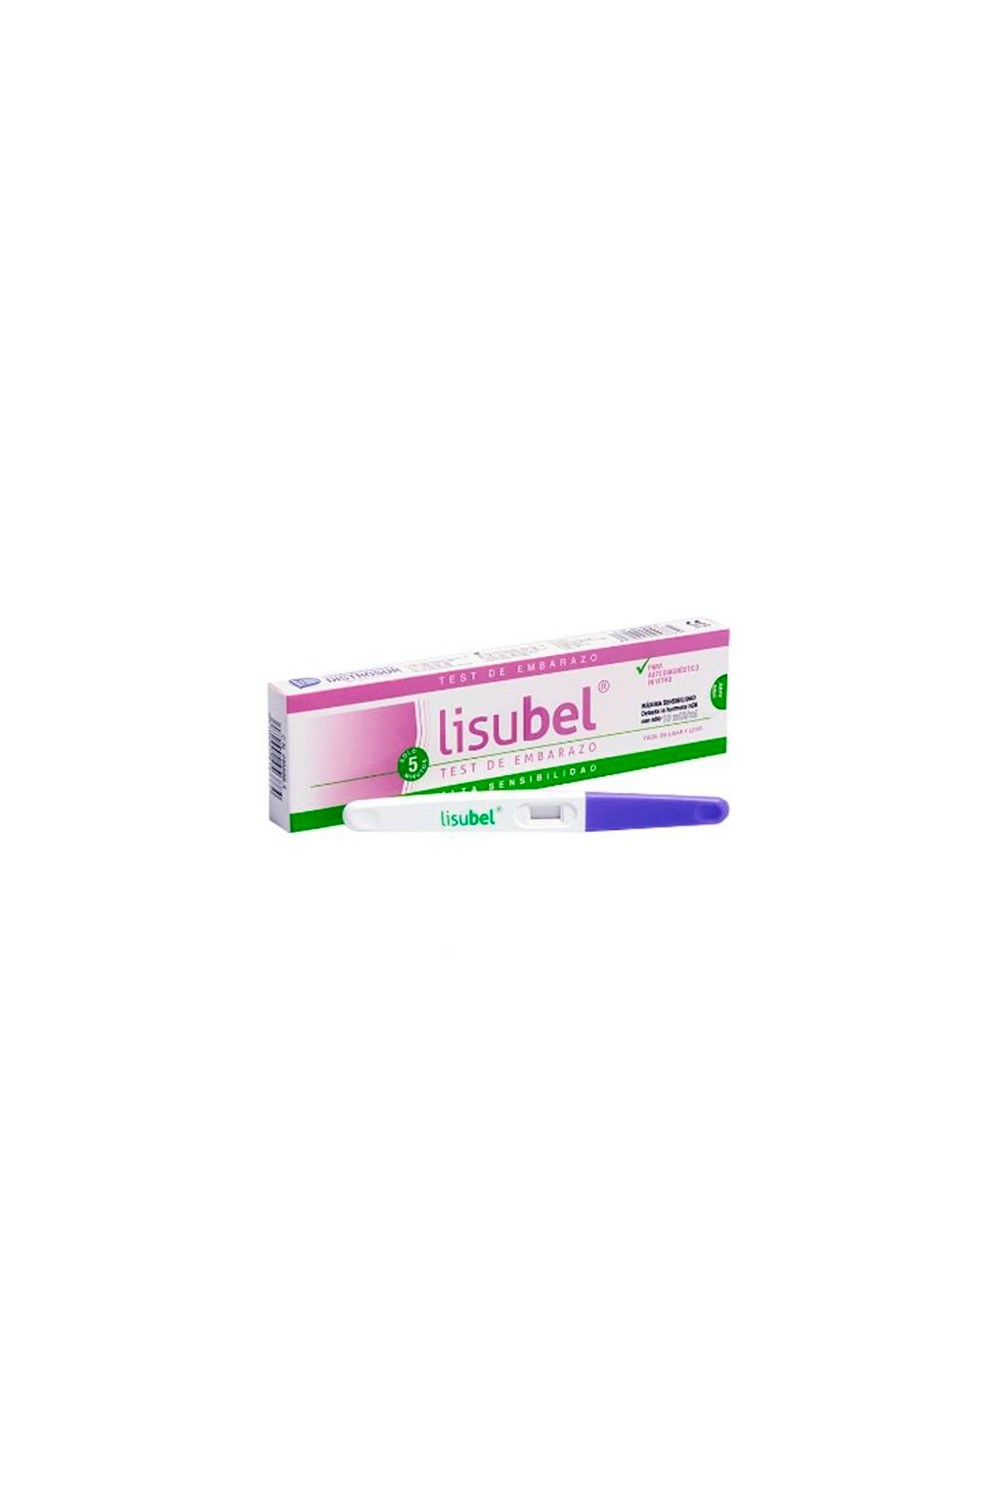 Lisubel Pregnancy Test Pen